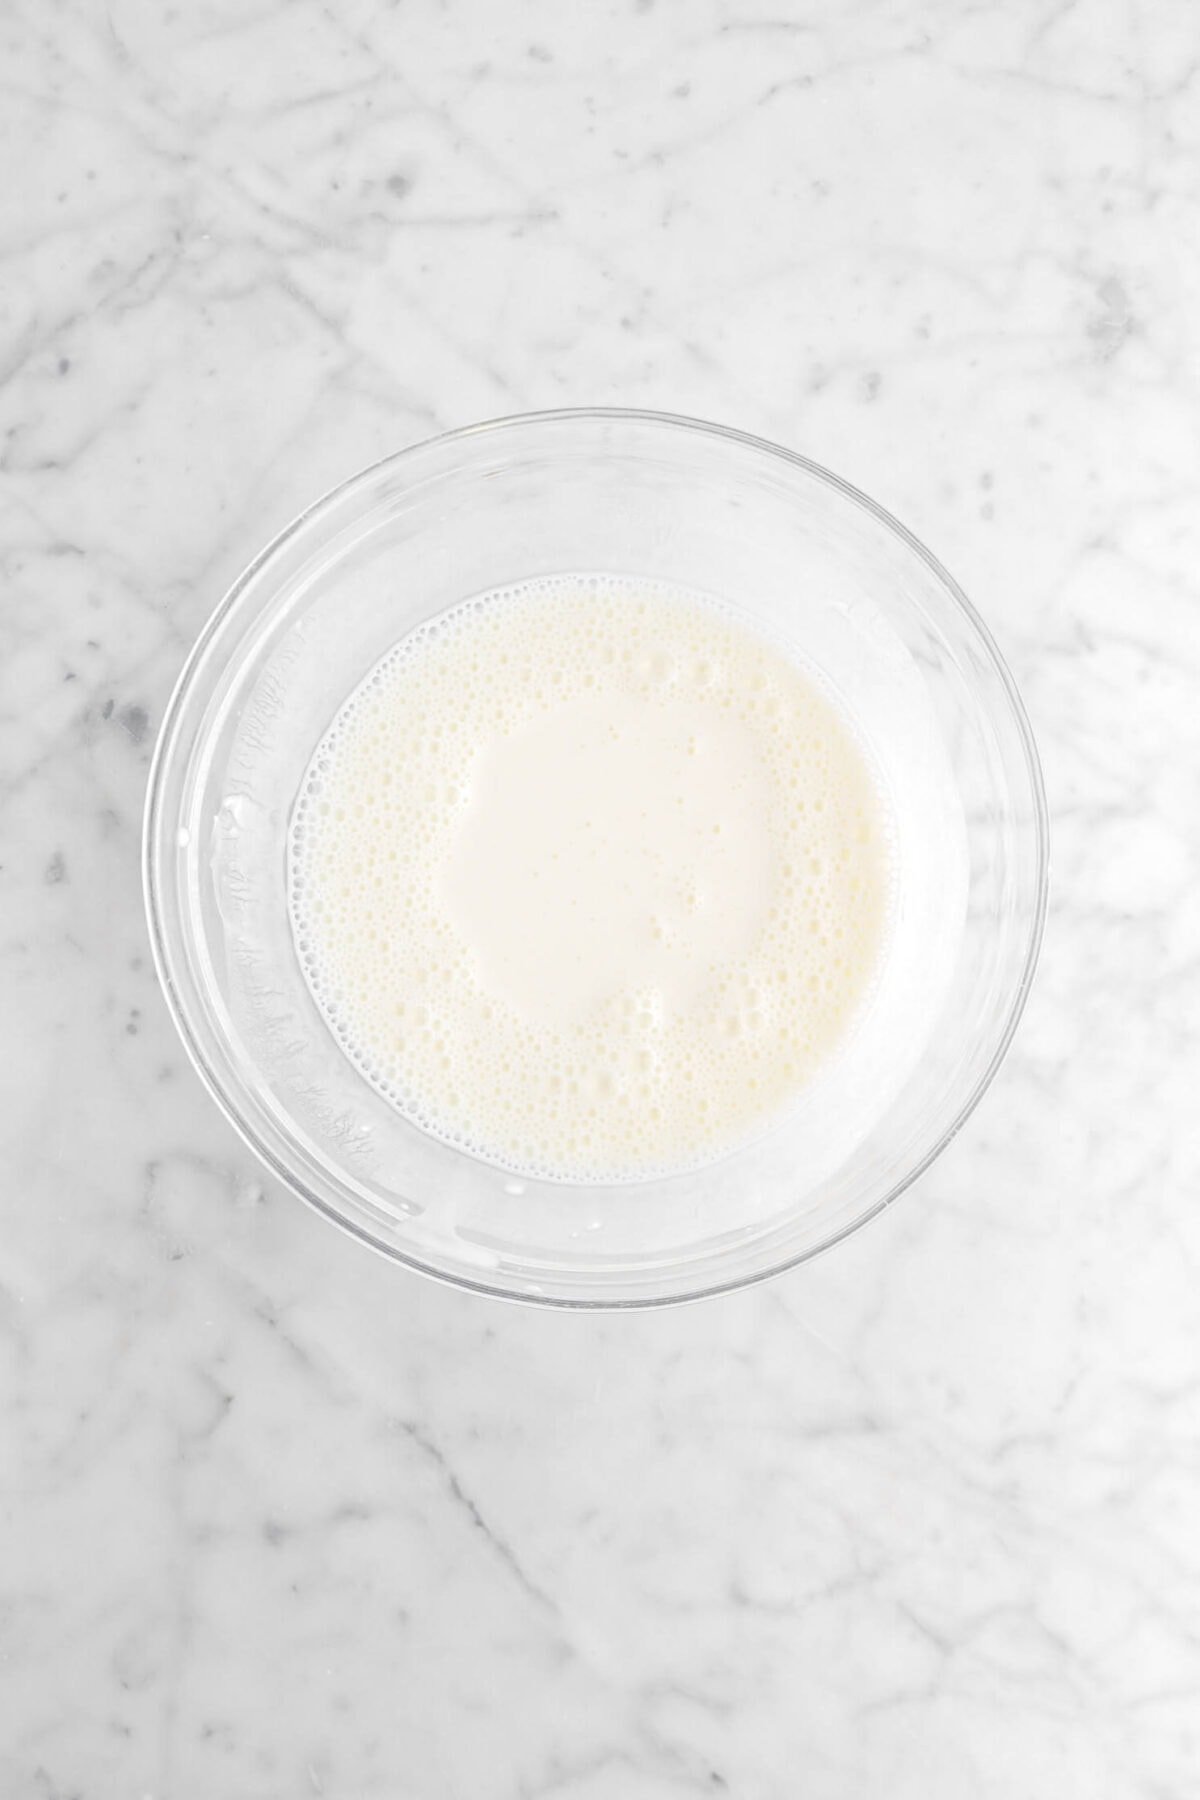 buttermilk mixture in glass bowl